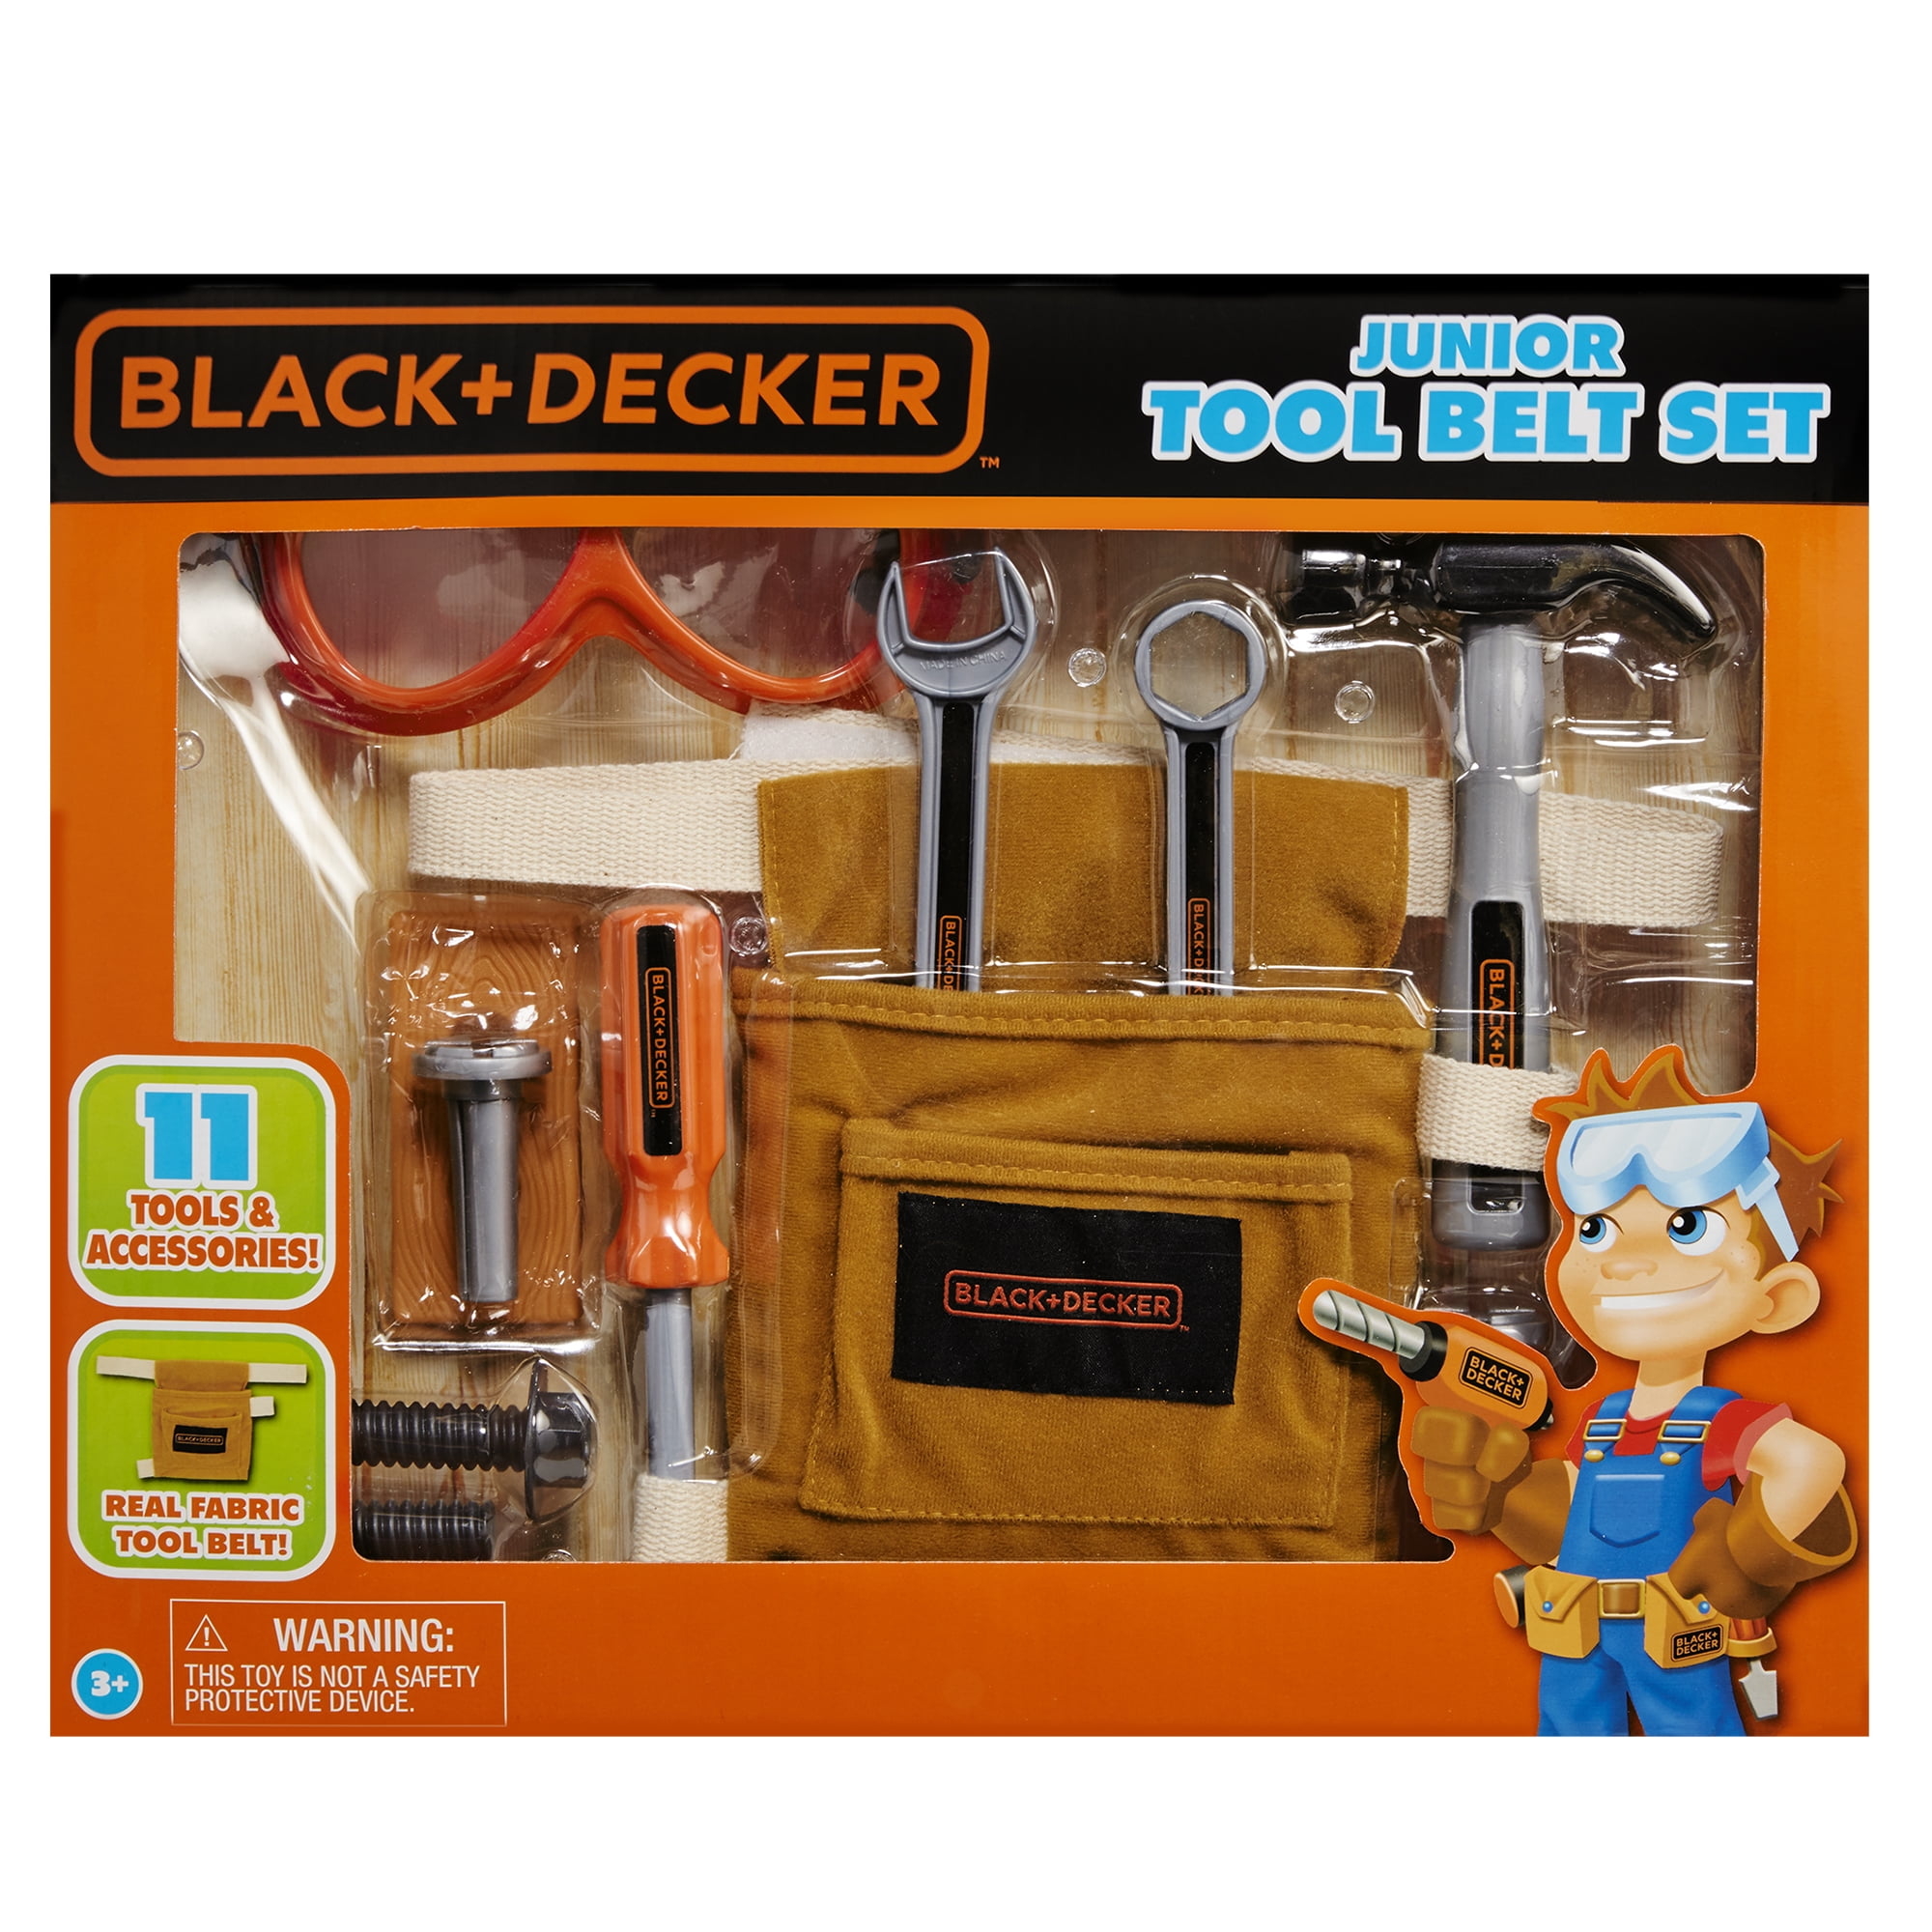 BLACK+DECKER Junior 14 Piece Toy Tool Belt Set for sale online 